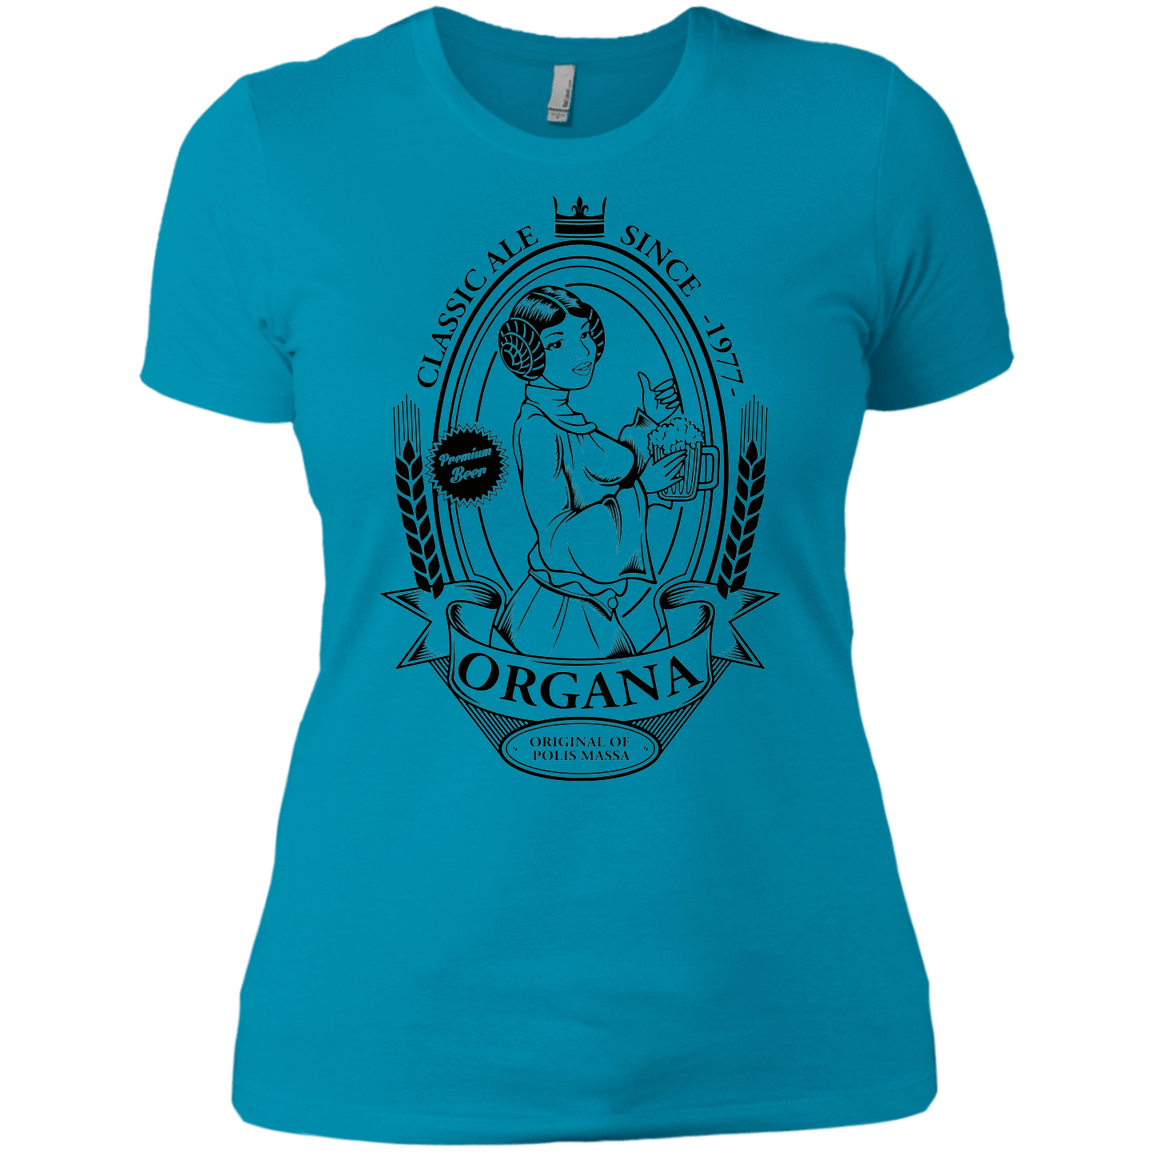 T-Shirts Turquoise / X-Small Organa Ale Women's Premium T-Shirt